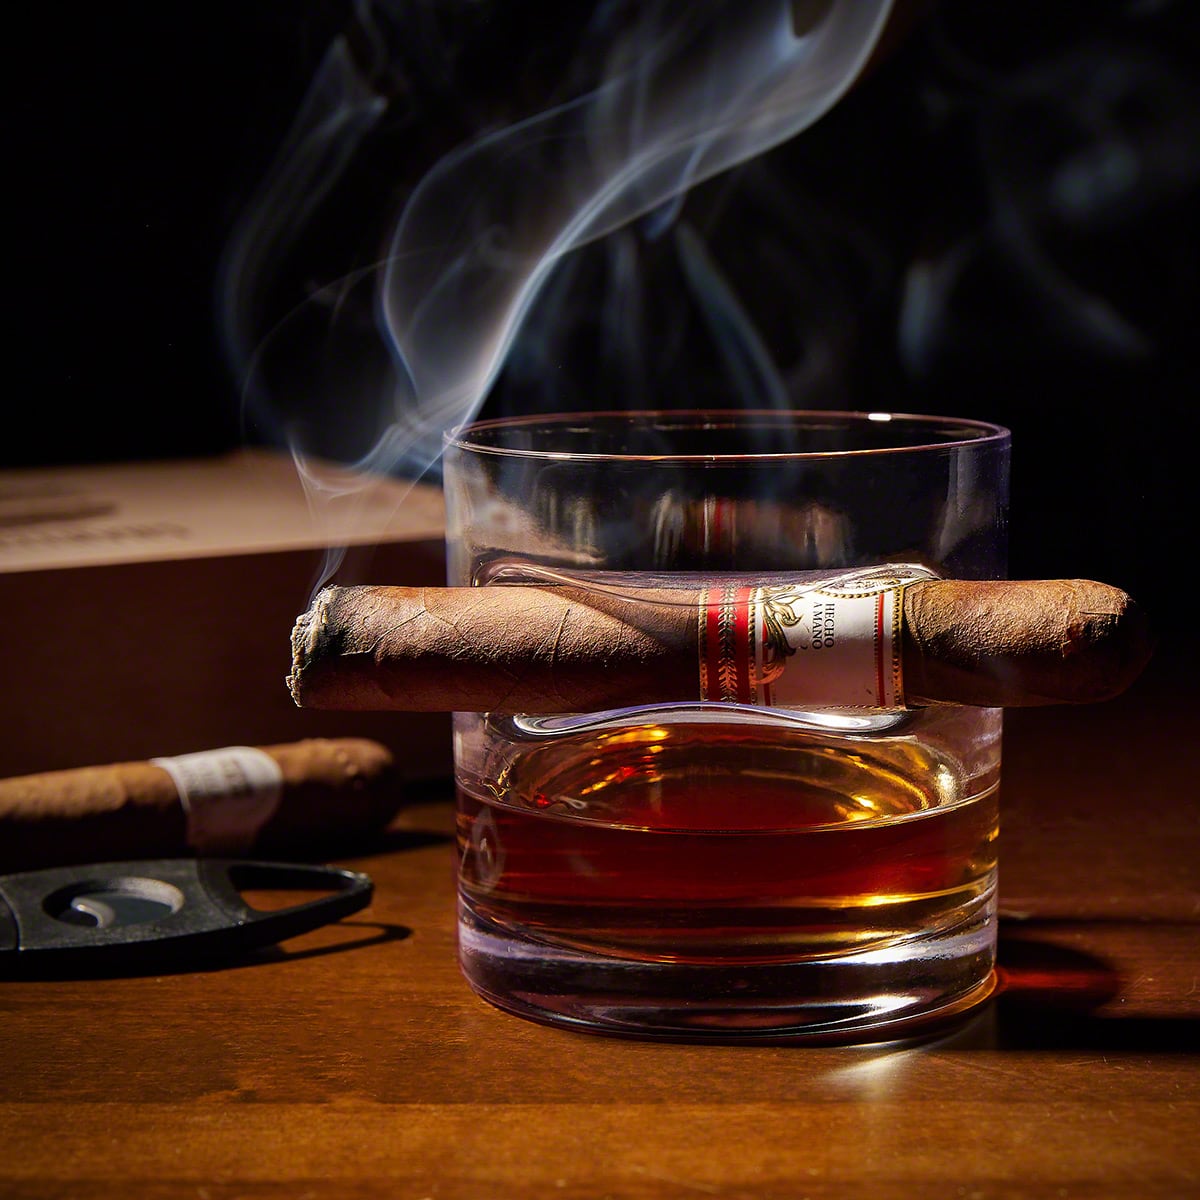 Oxley Custom Cigar Glasses and Whiskey Decanter Set - Ebony Black Box